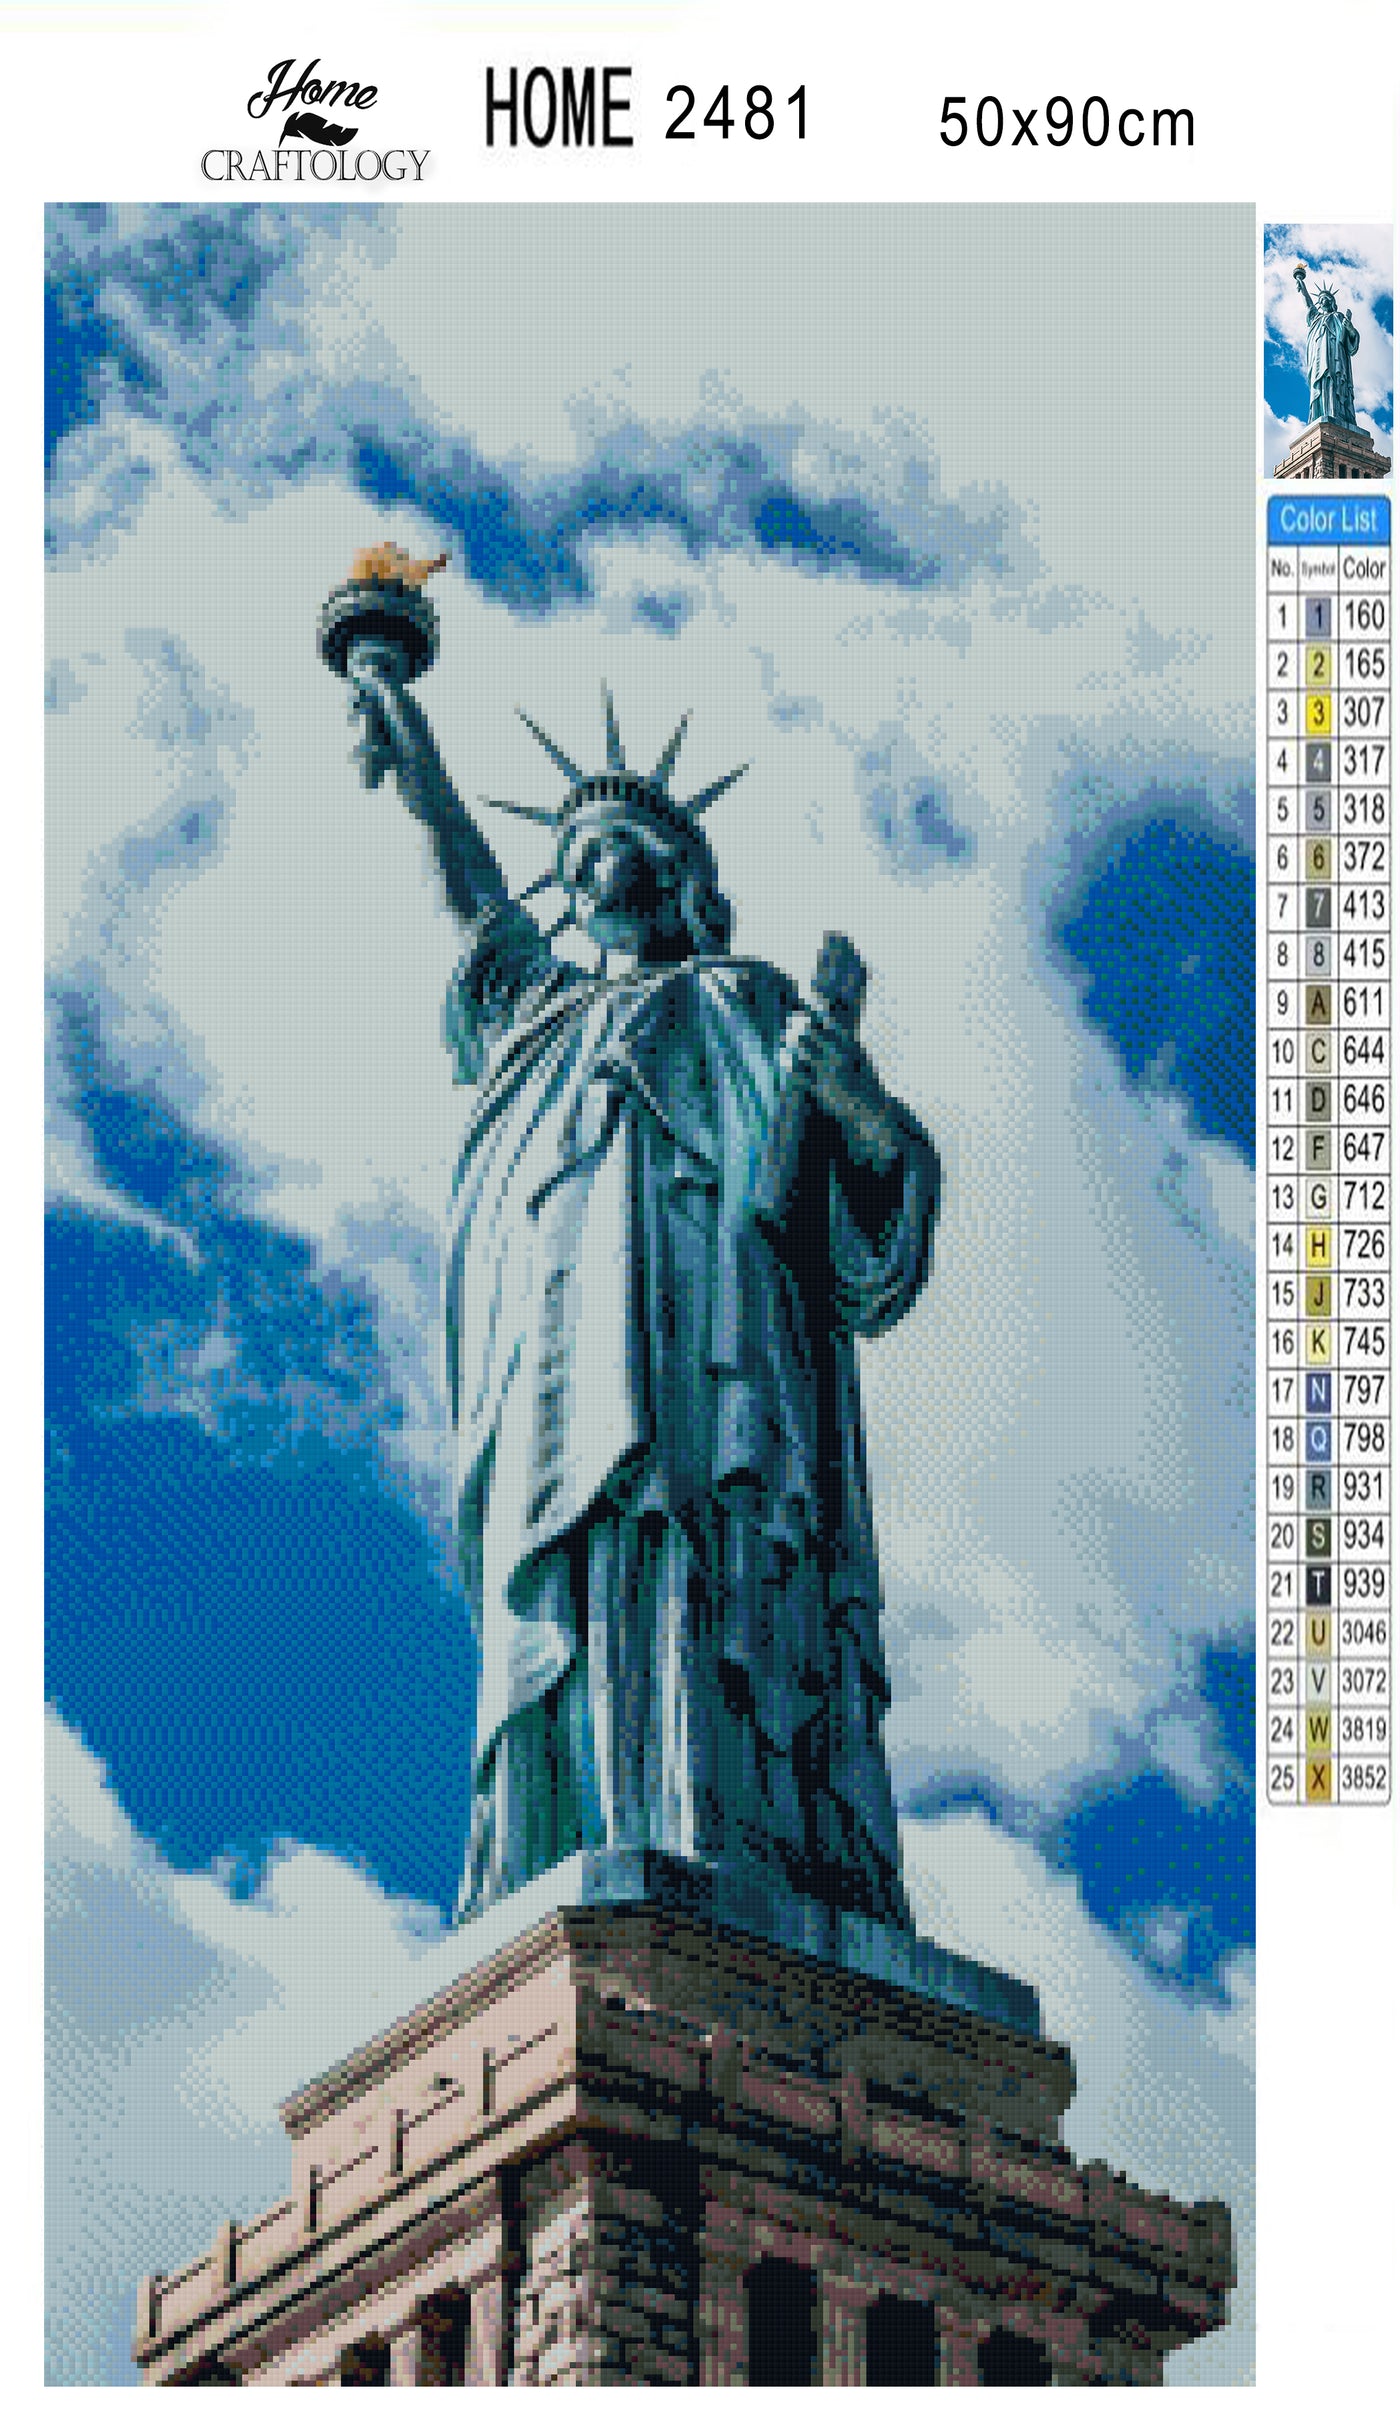 Iconic Statue of Liberty - Premium Diamond Painting Kit